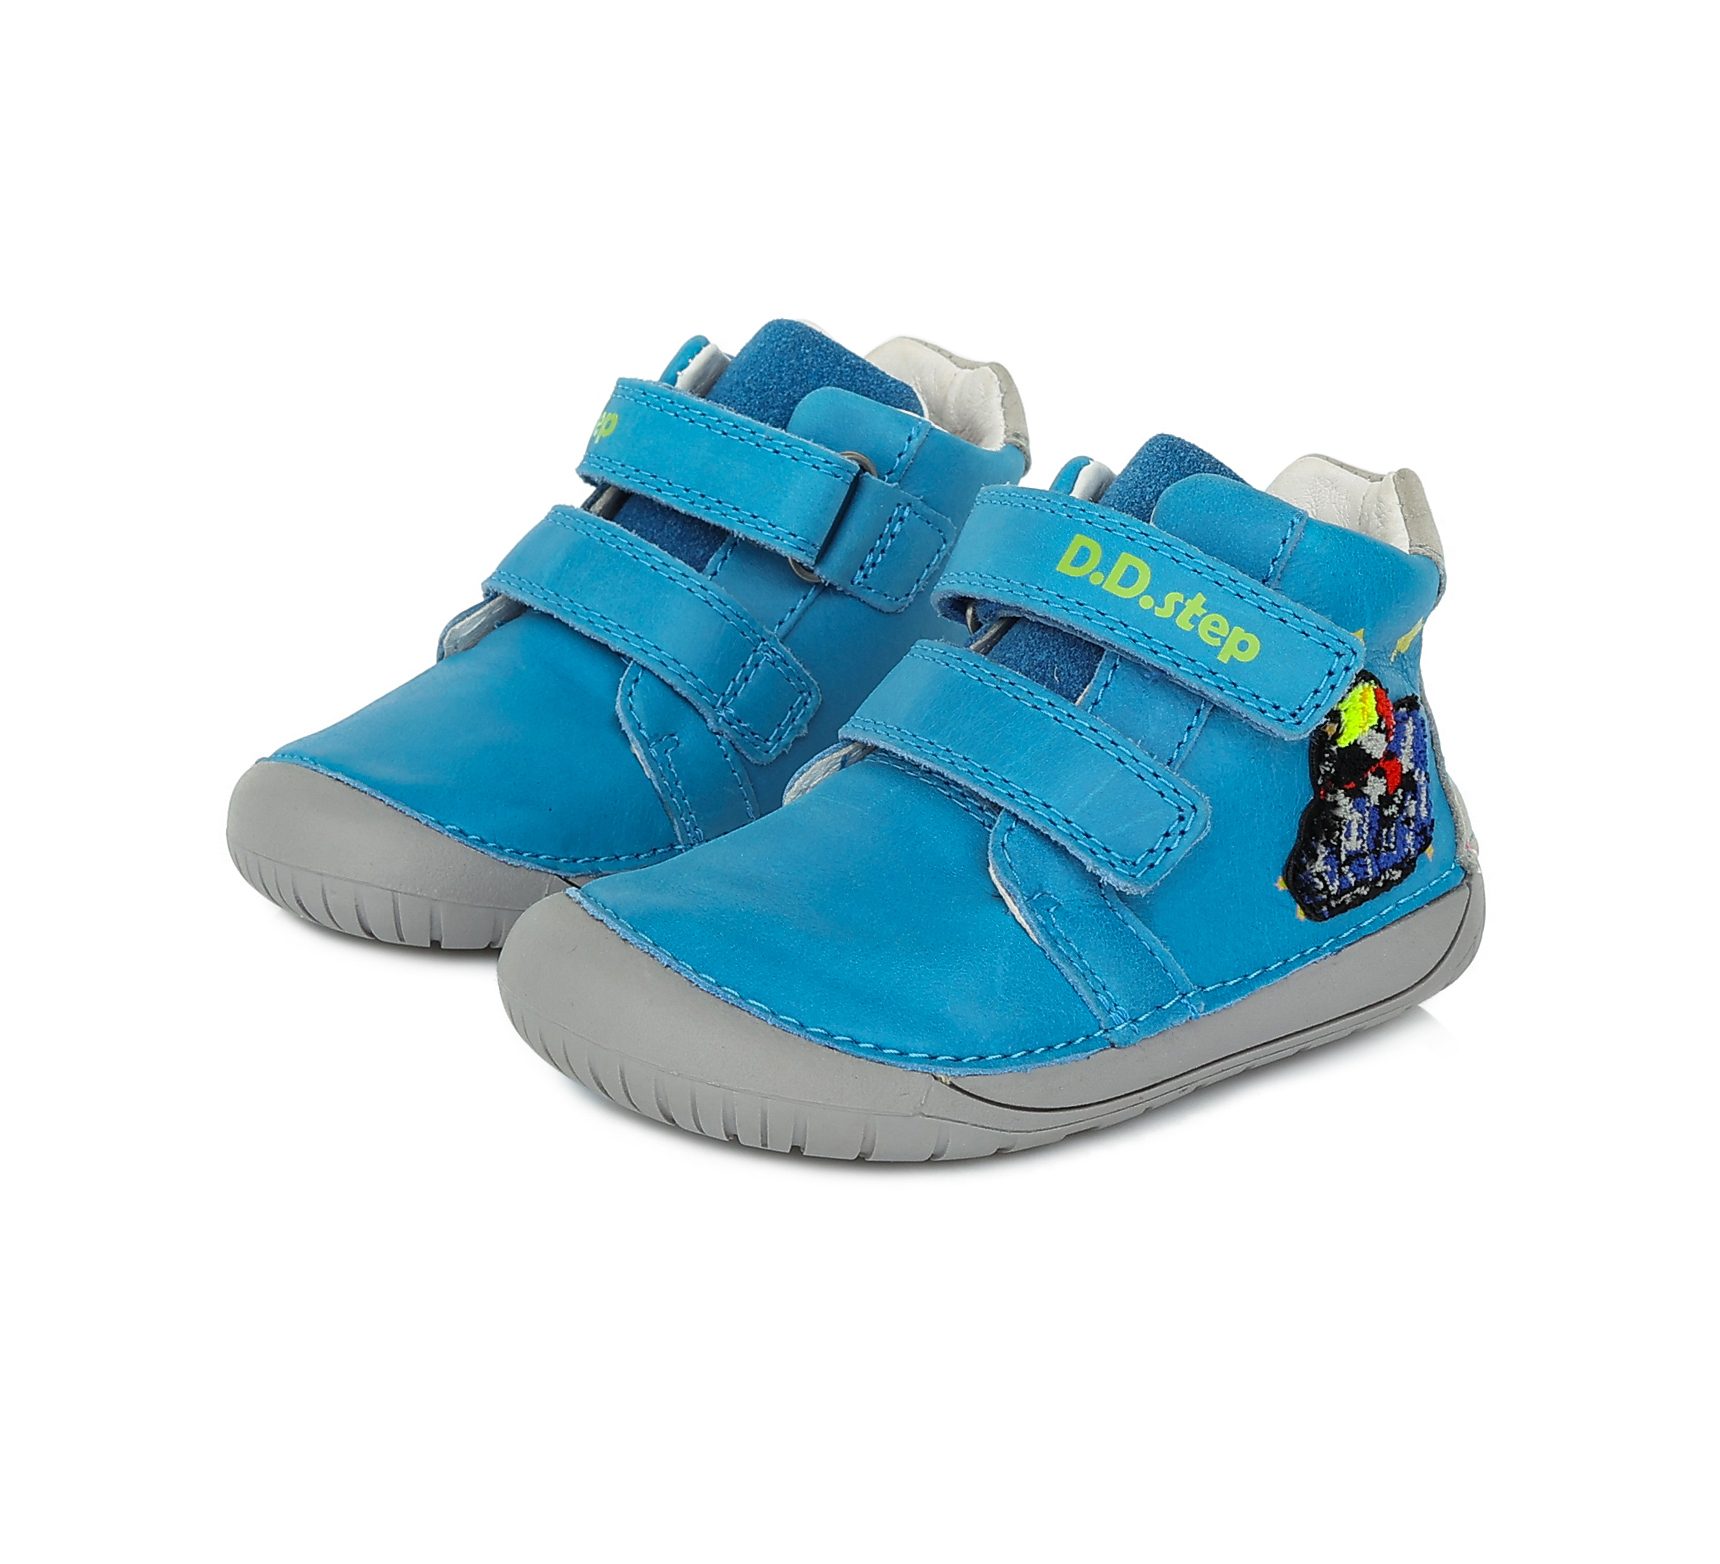 D.D.Step leather boots Sky Blue Astronaut